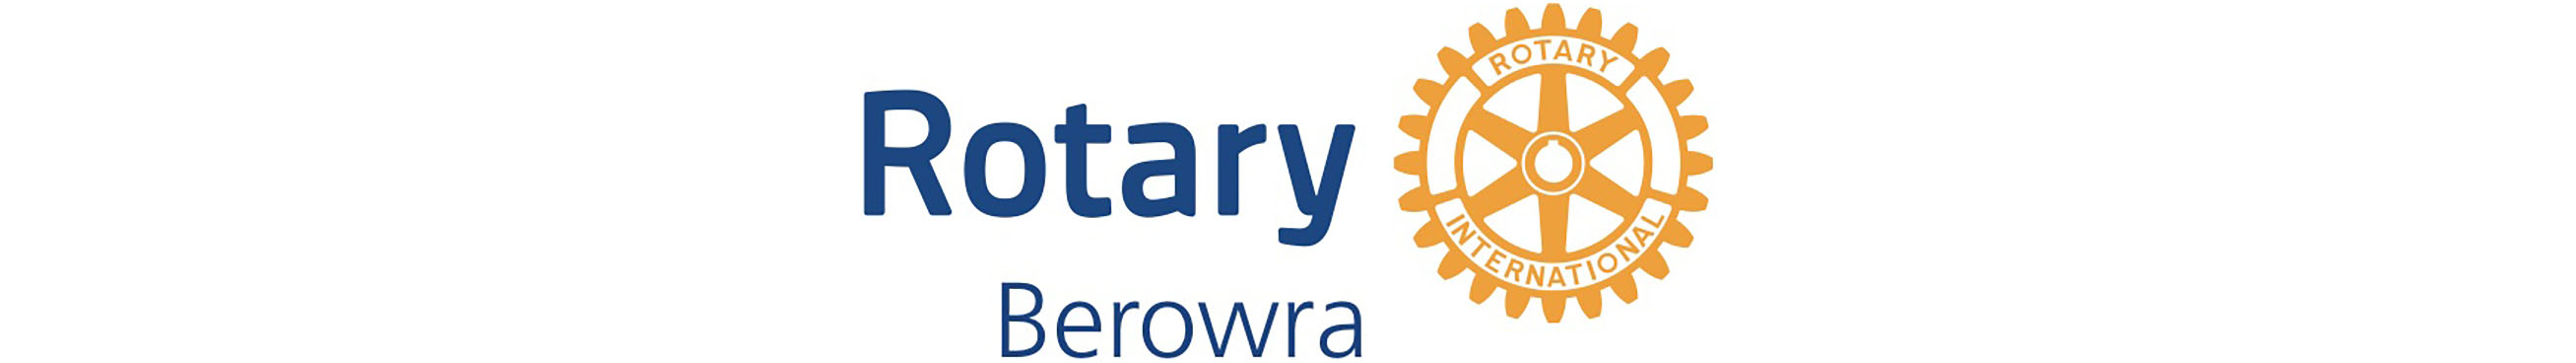 Rotary Approval Logo